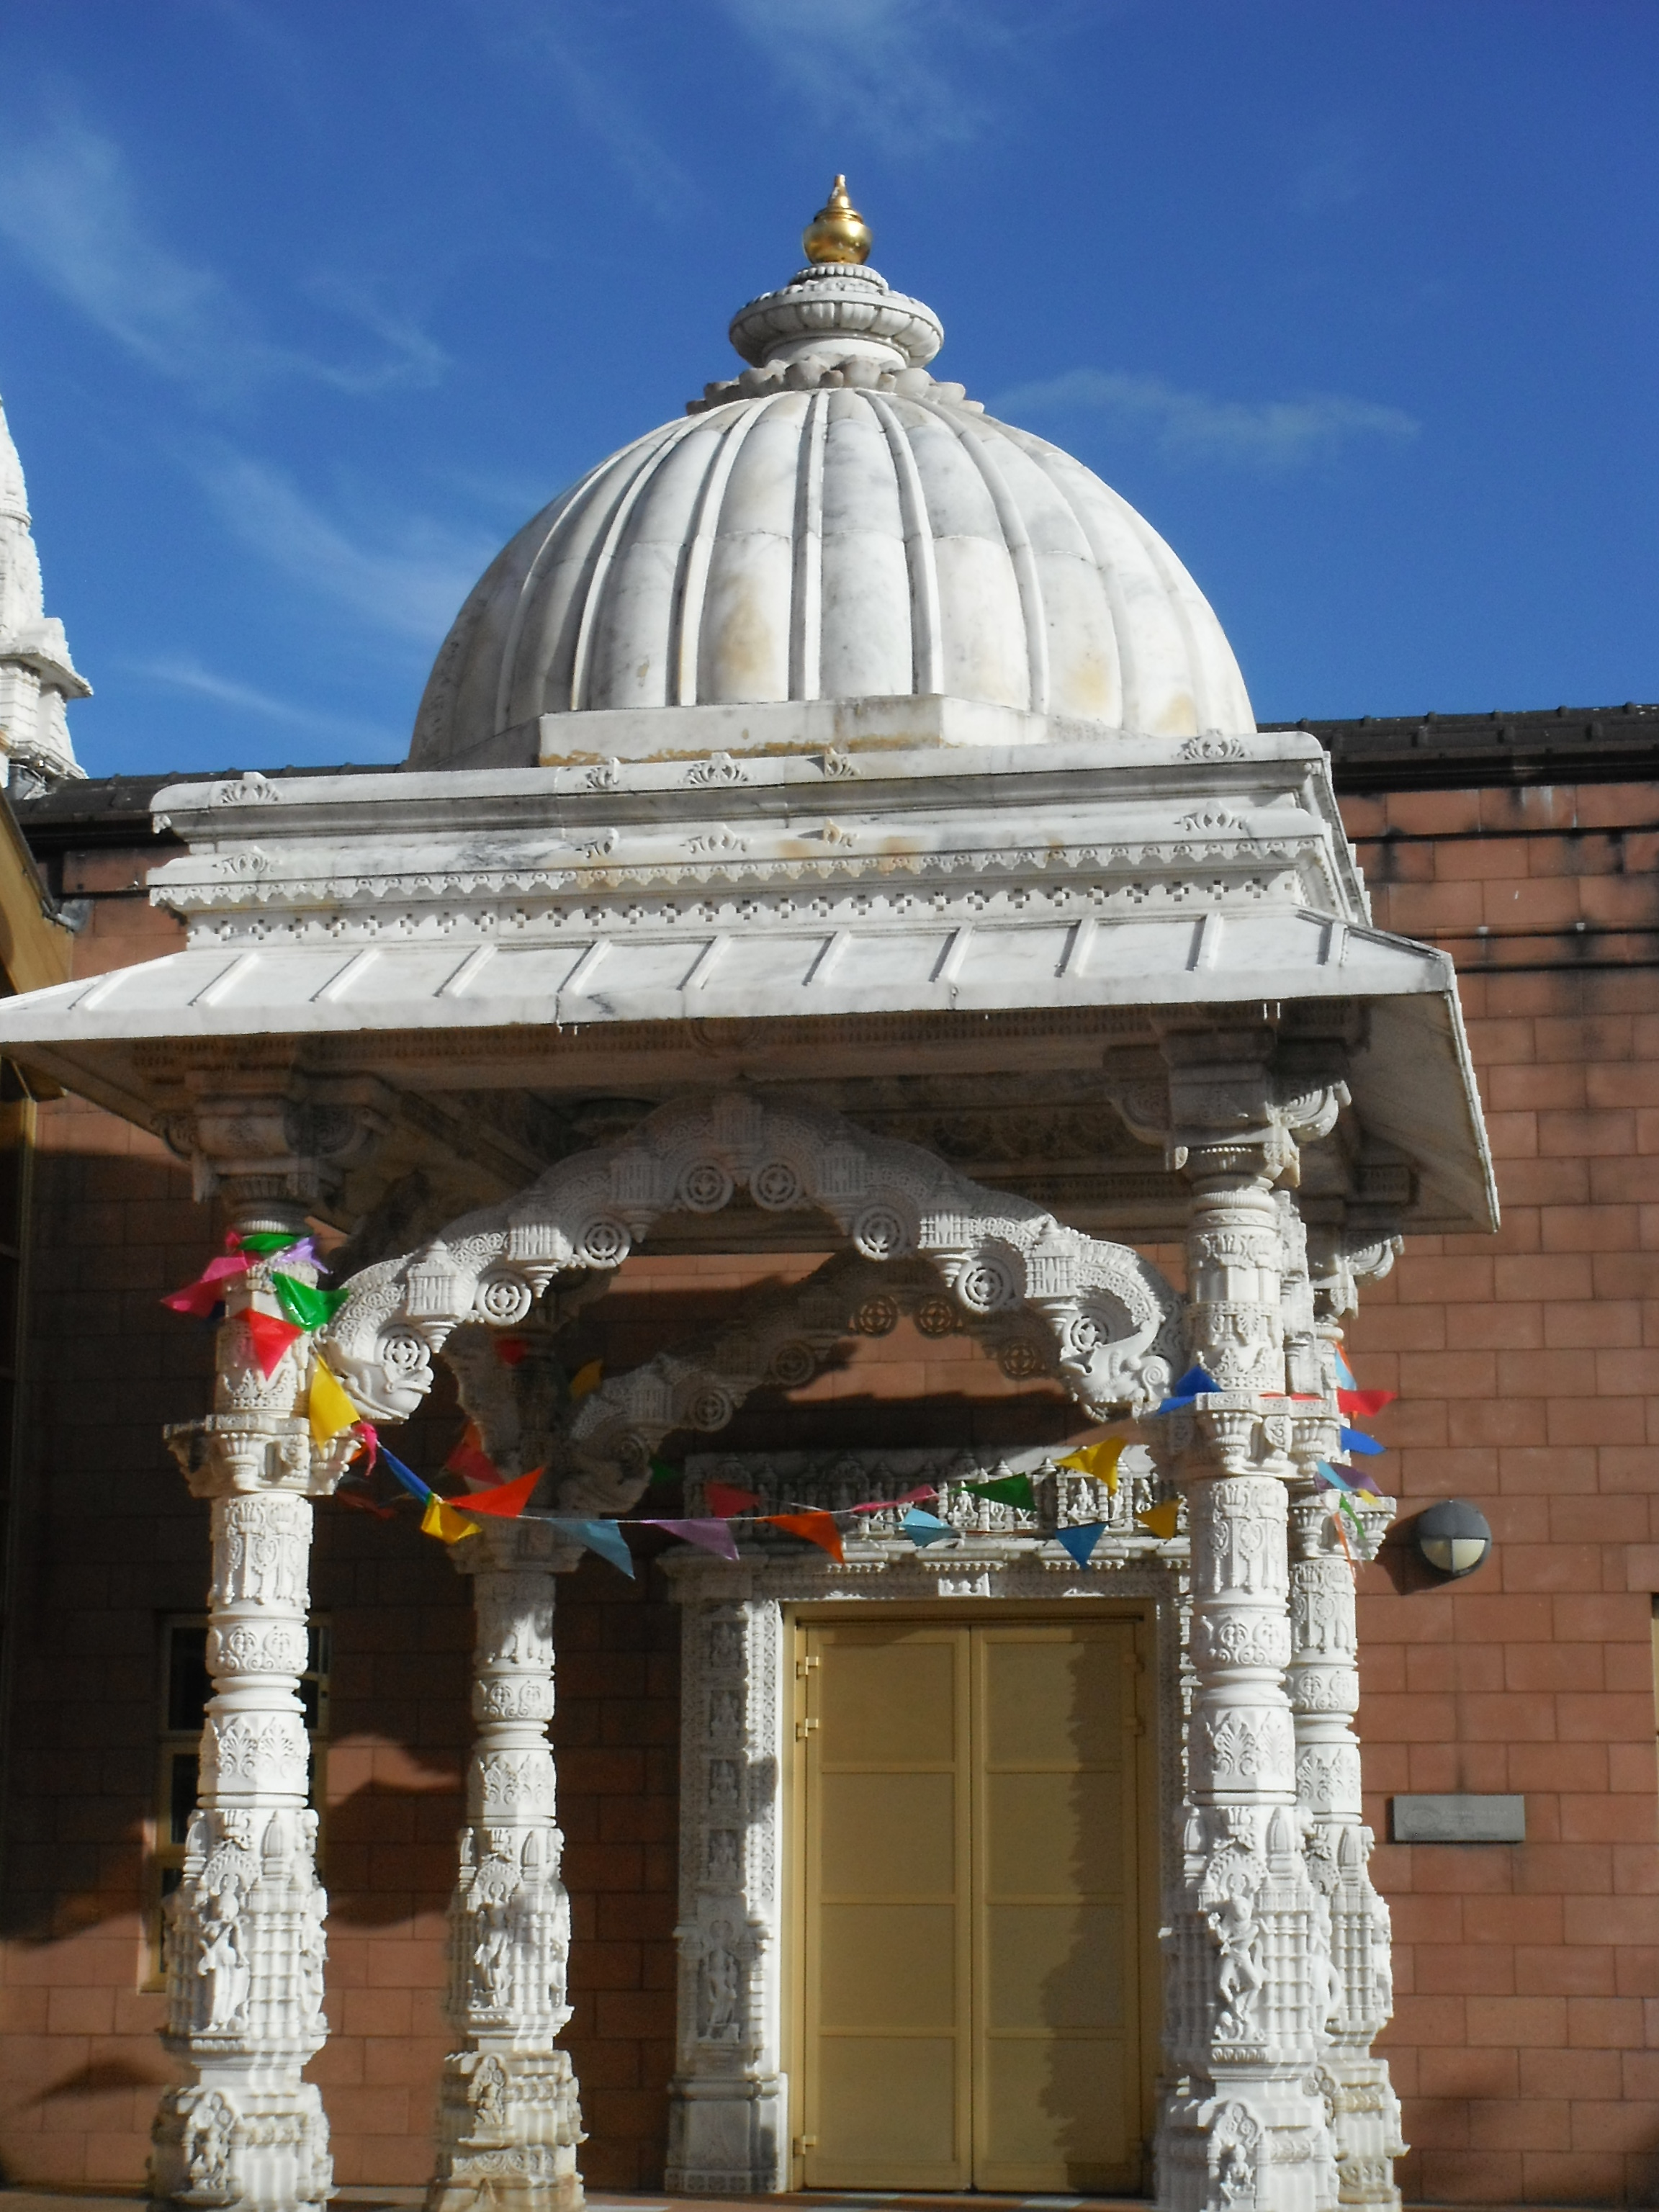 Photo taken by me – The Gujurat Hindu Temple